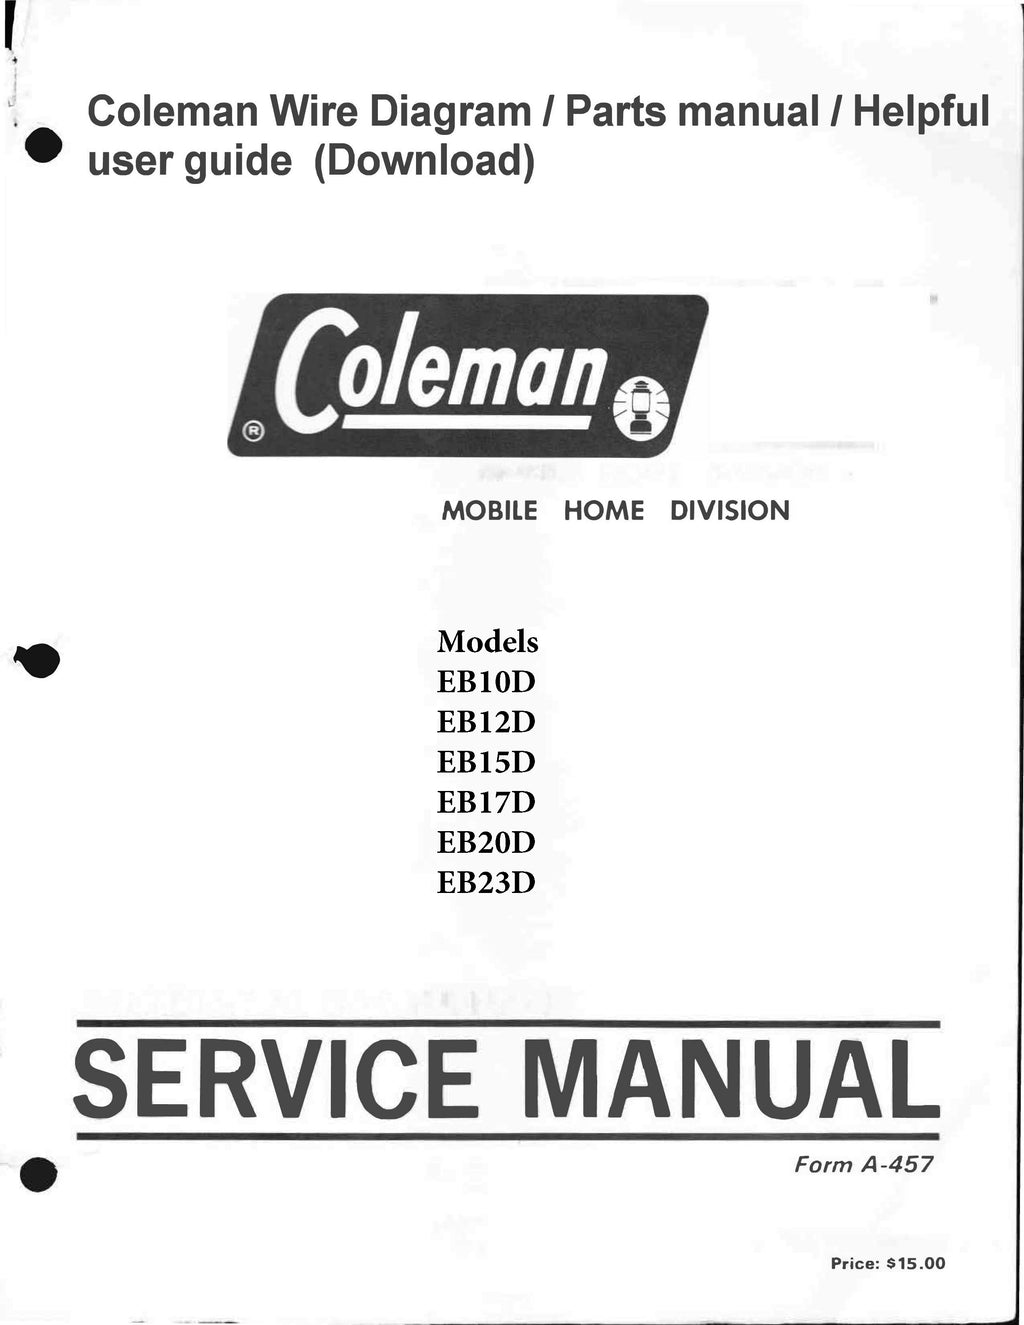 Coleman Electric Furnace Manual